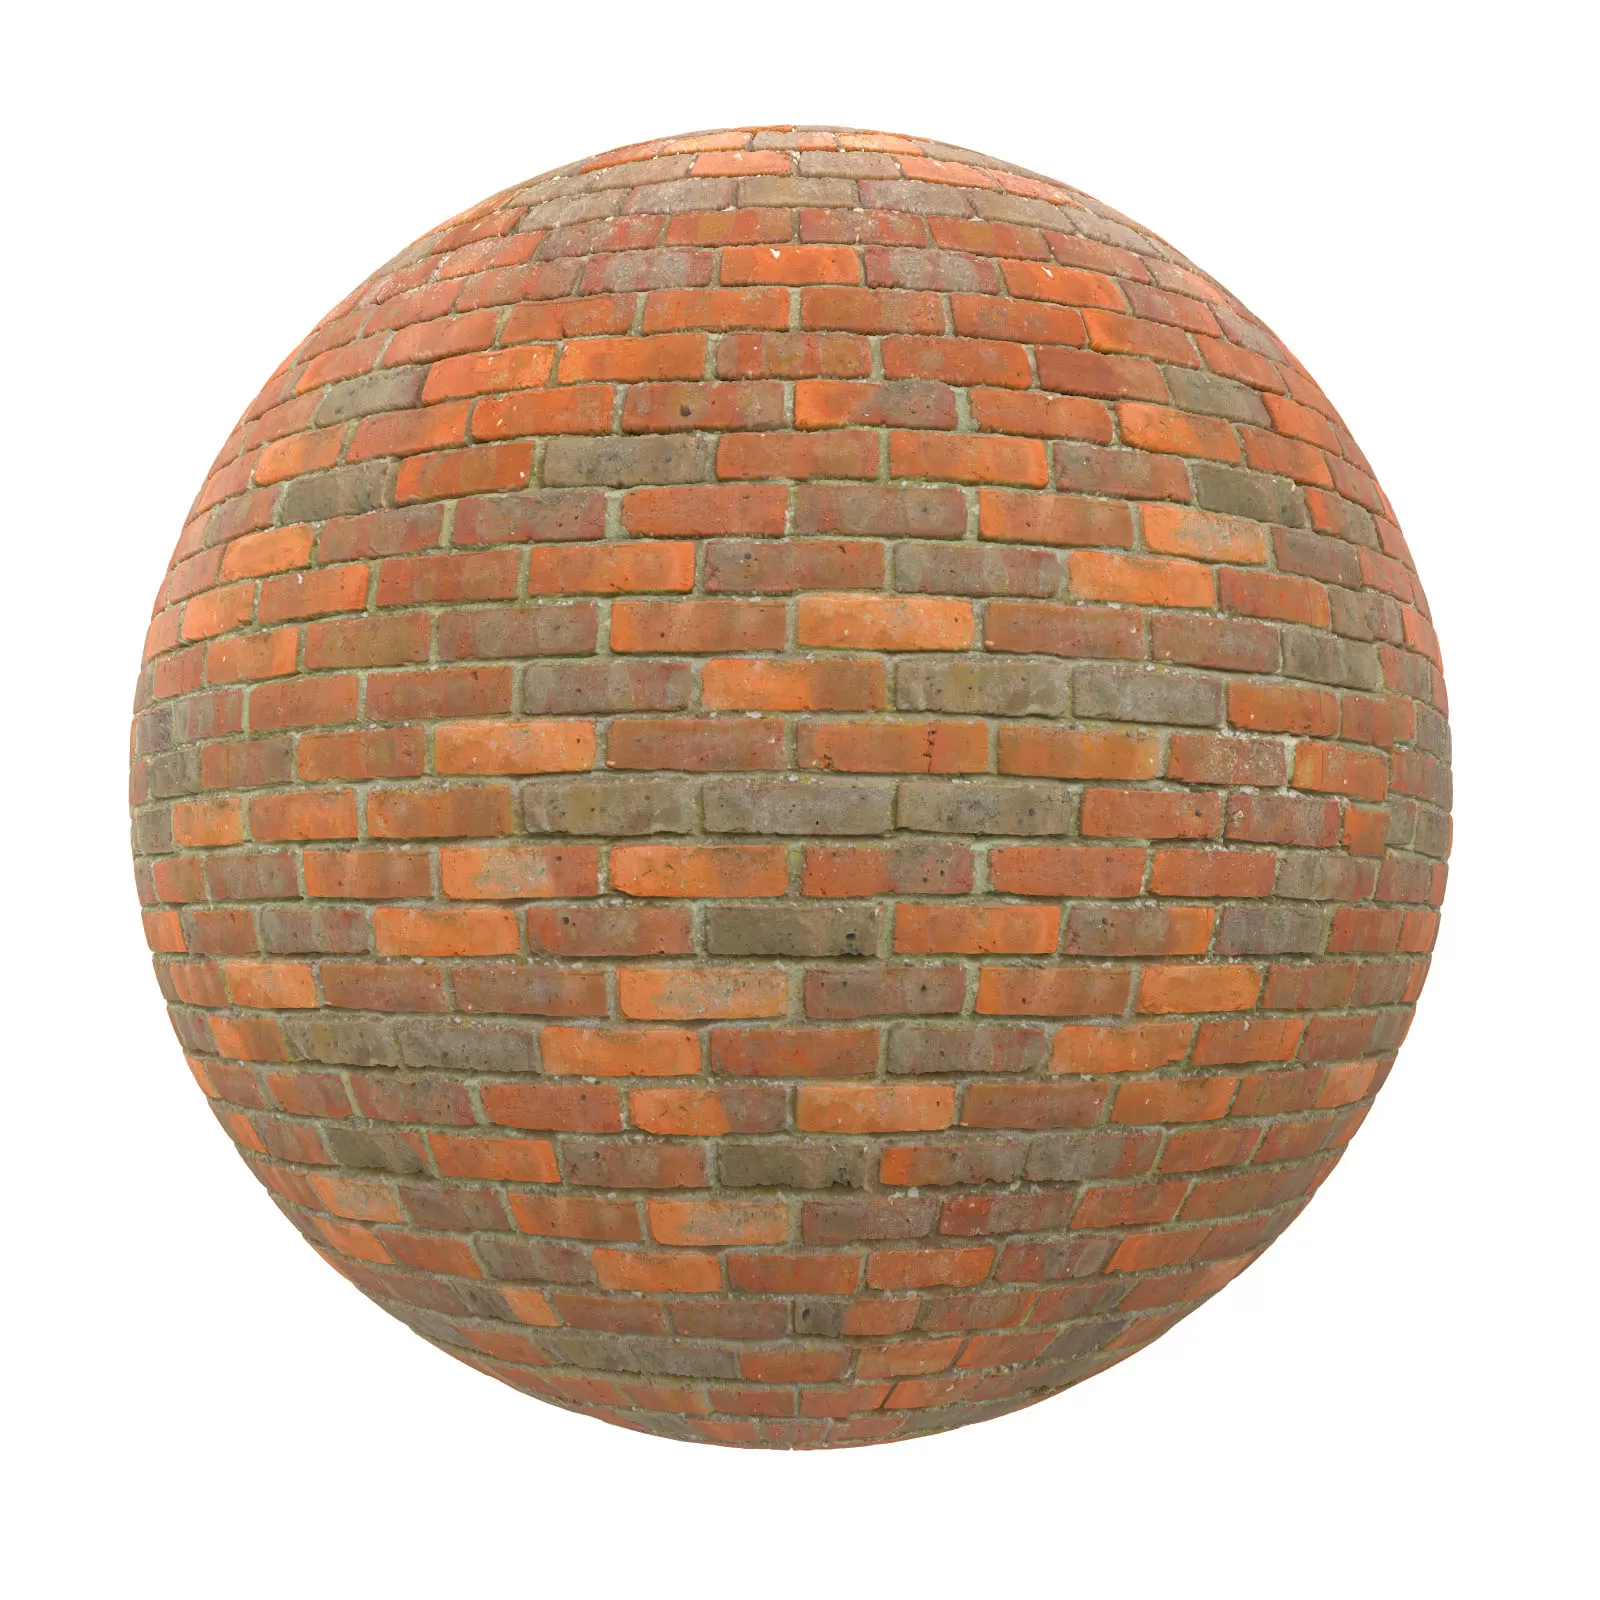 PBR CGAXIS TEXTURES – BRICK – Red Brick Wall 15